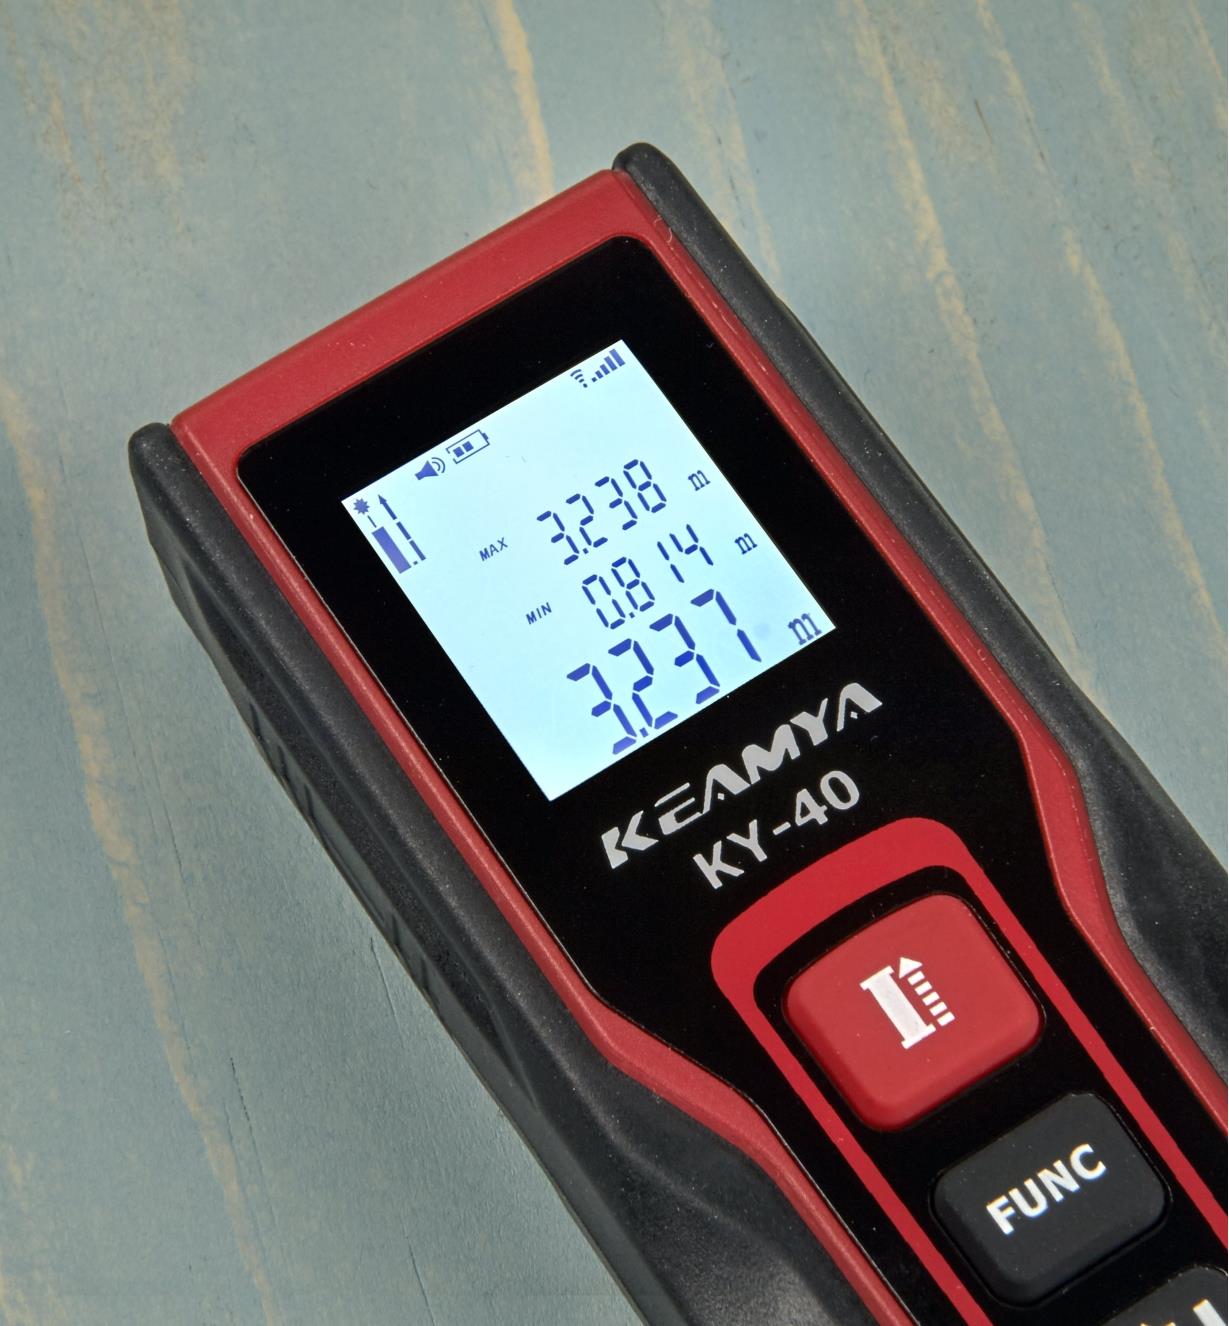 A pocket laser measure displays measurements in metric